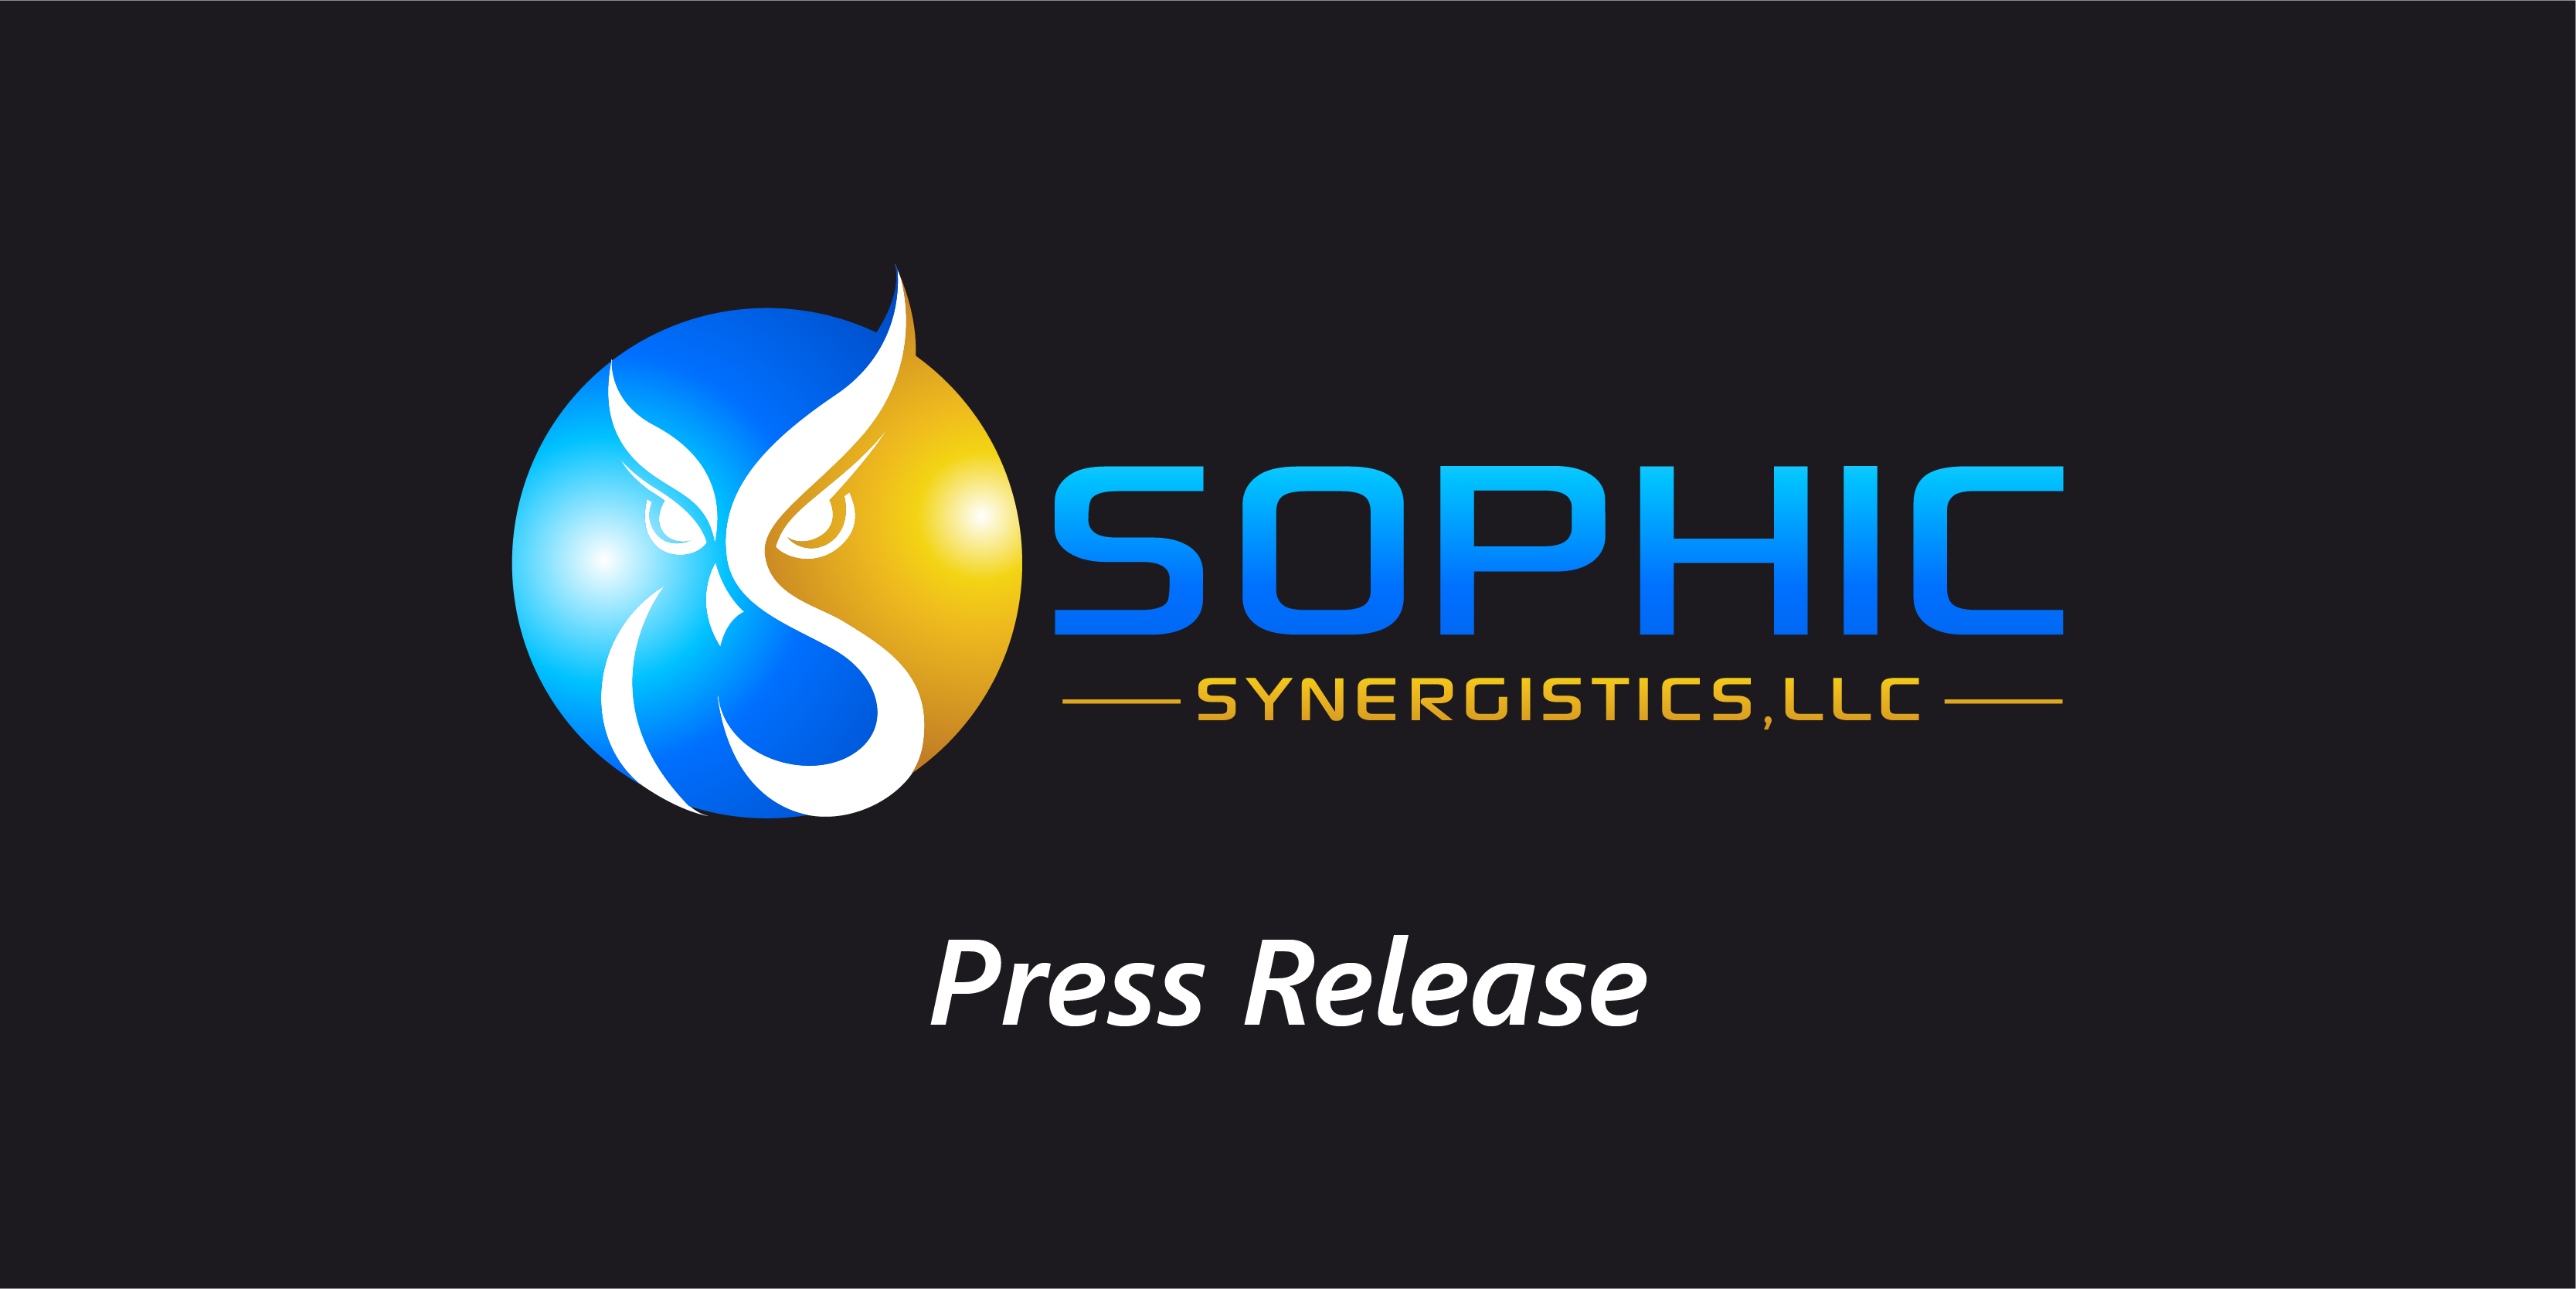 Sophic Synergistics, LLC Press Release